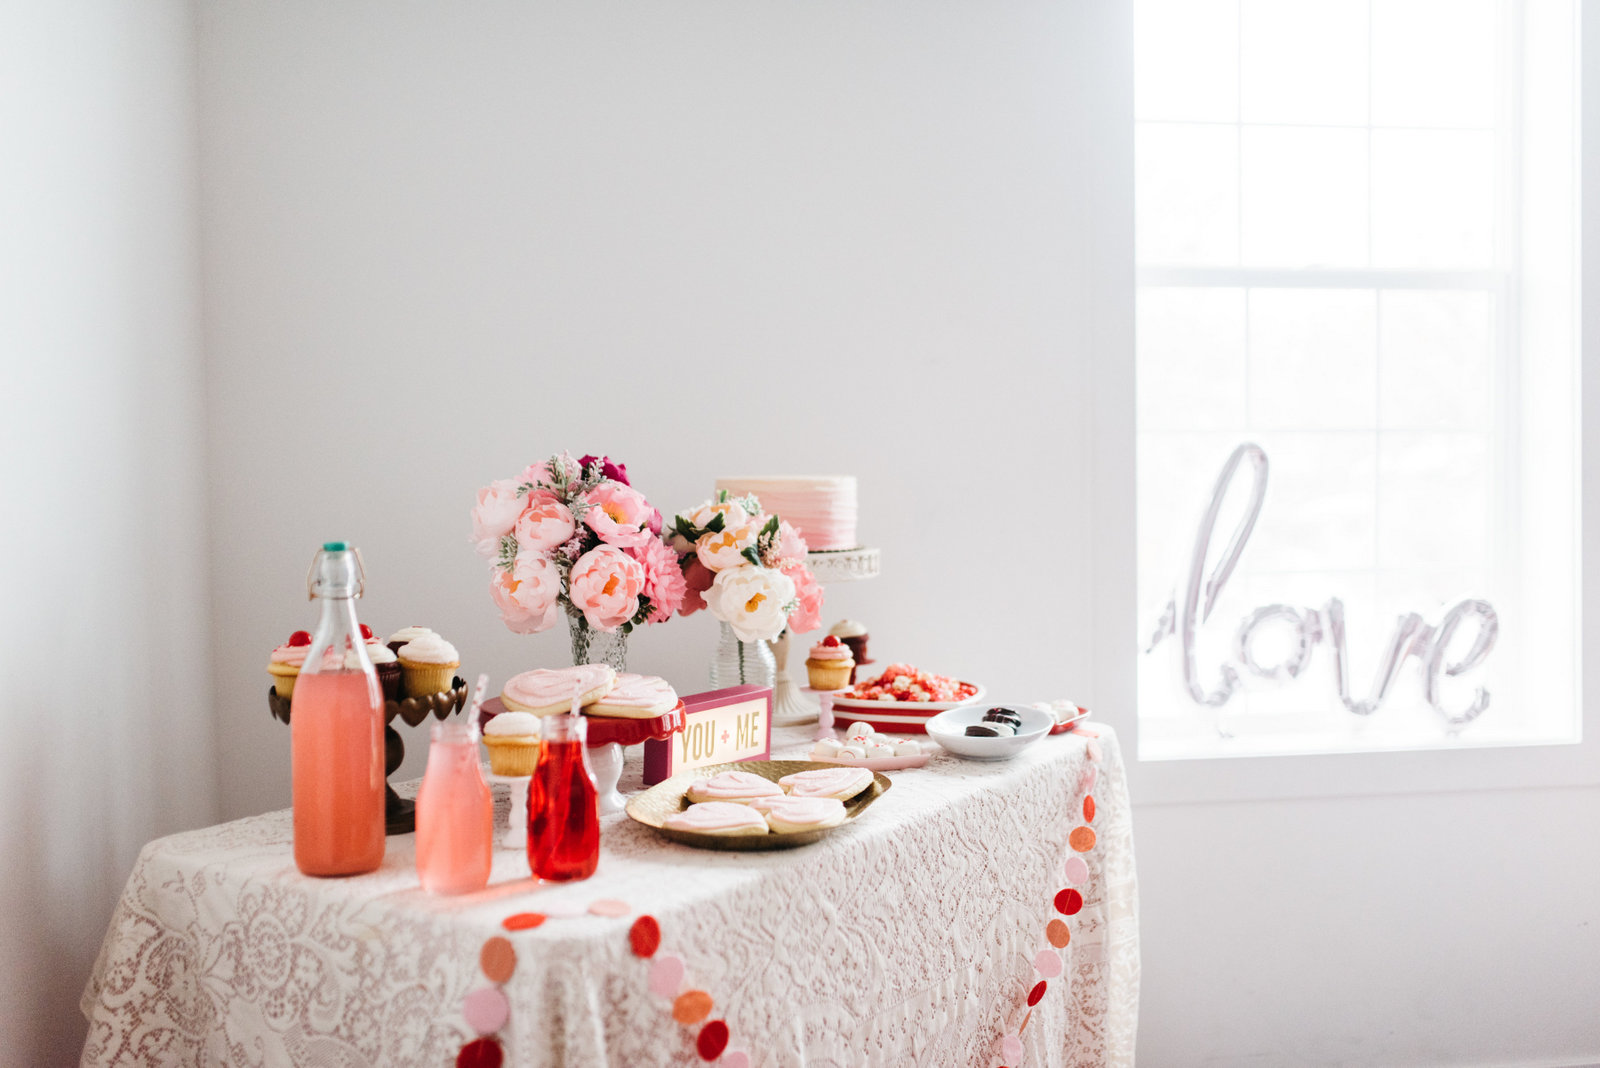 Valentine's Day desserr table